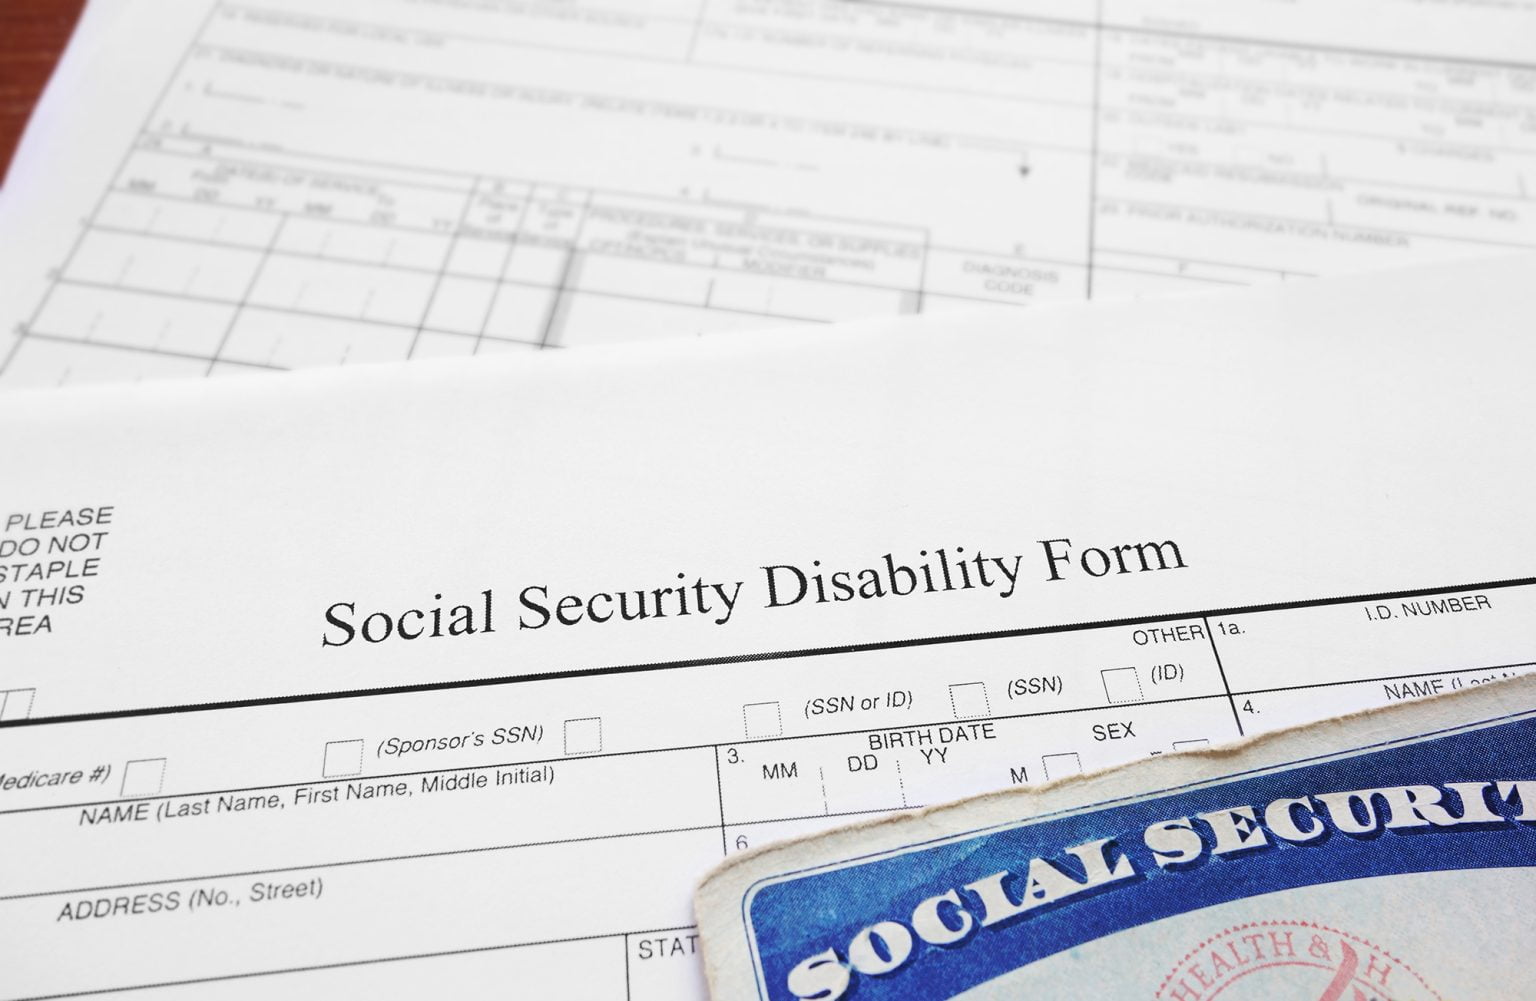 Social Security disability claim form and Social Security card